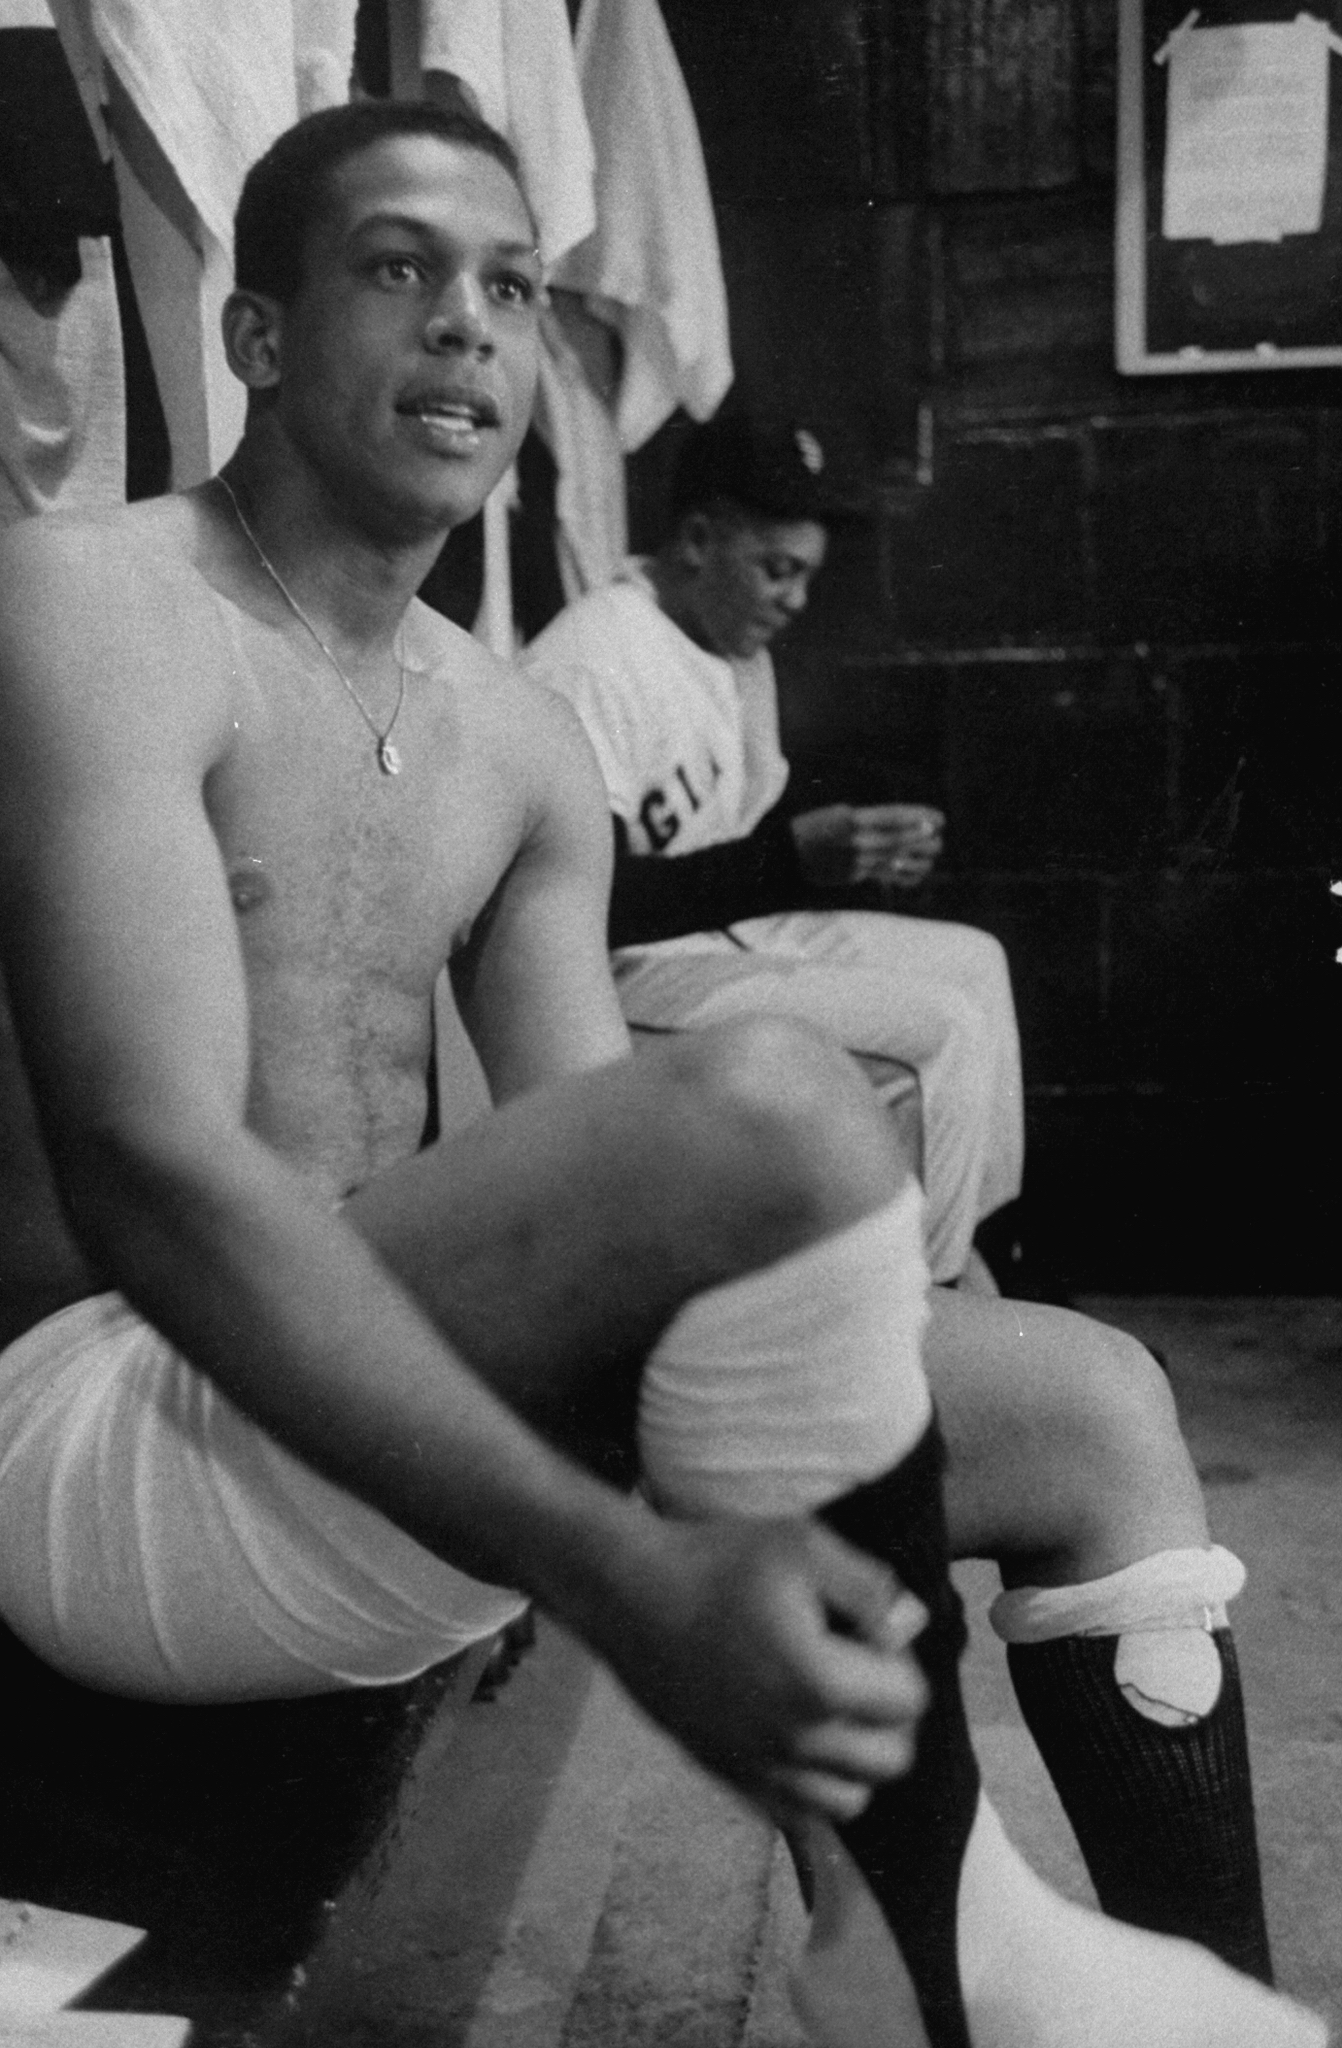 Orlando Cepeda gets dressed in the locker room in June, 1958.